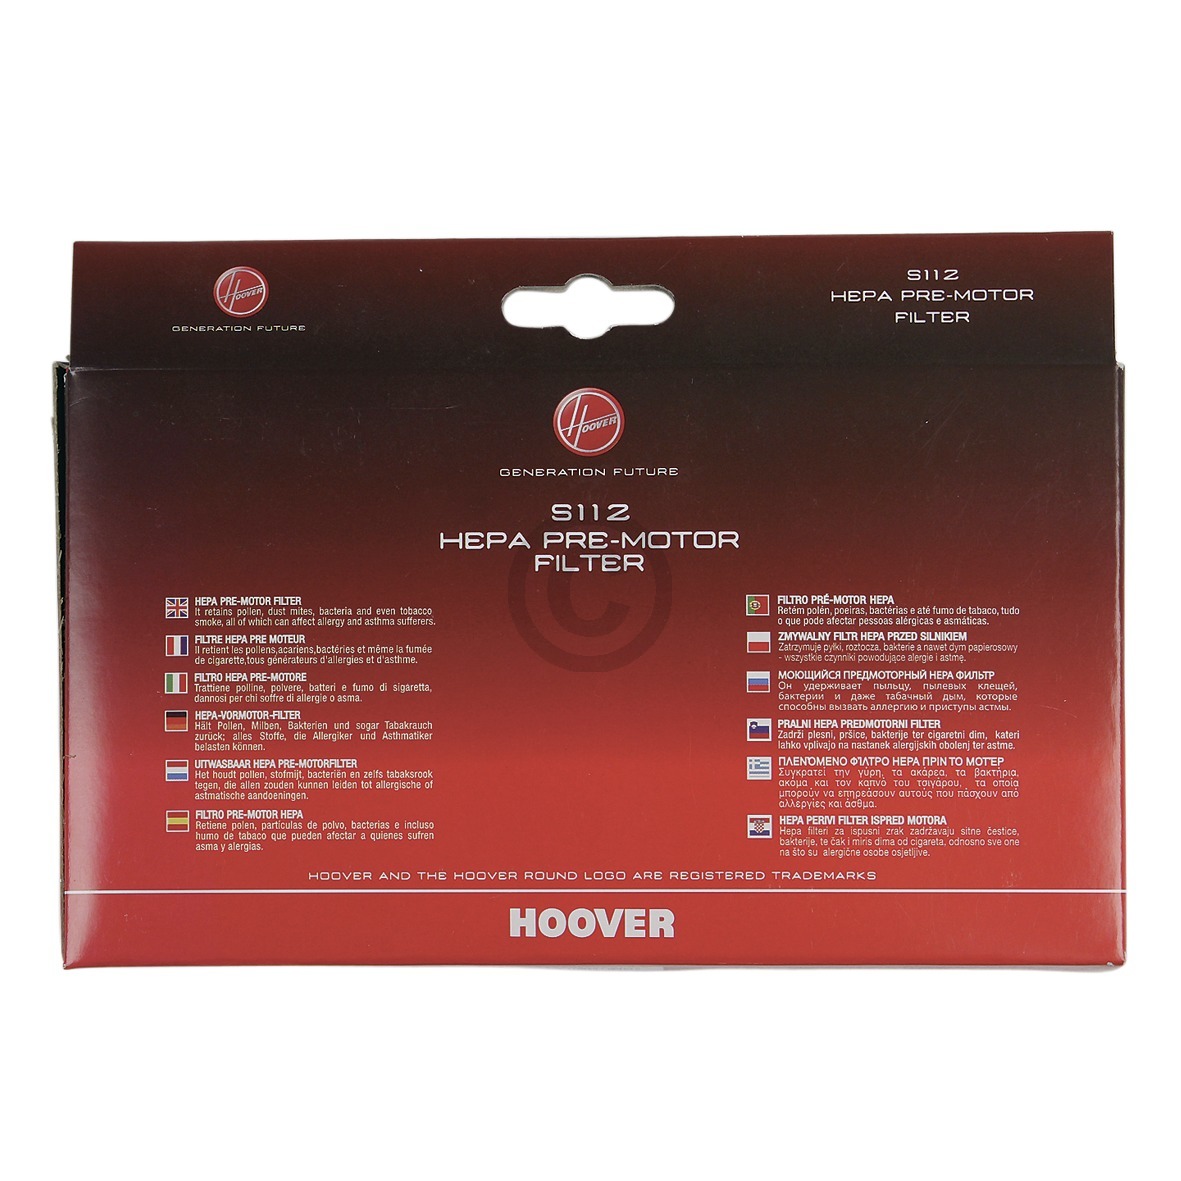 Filter Motorschutzfilter Hoover S112 35601237 für Staubsauger